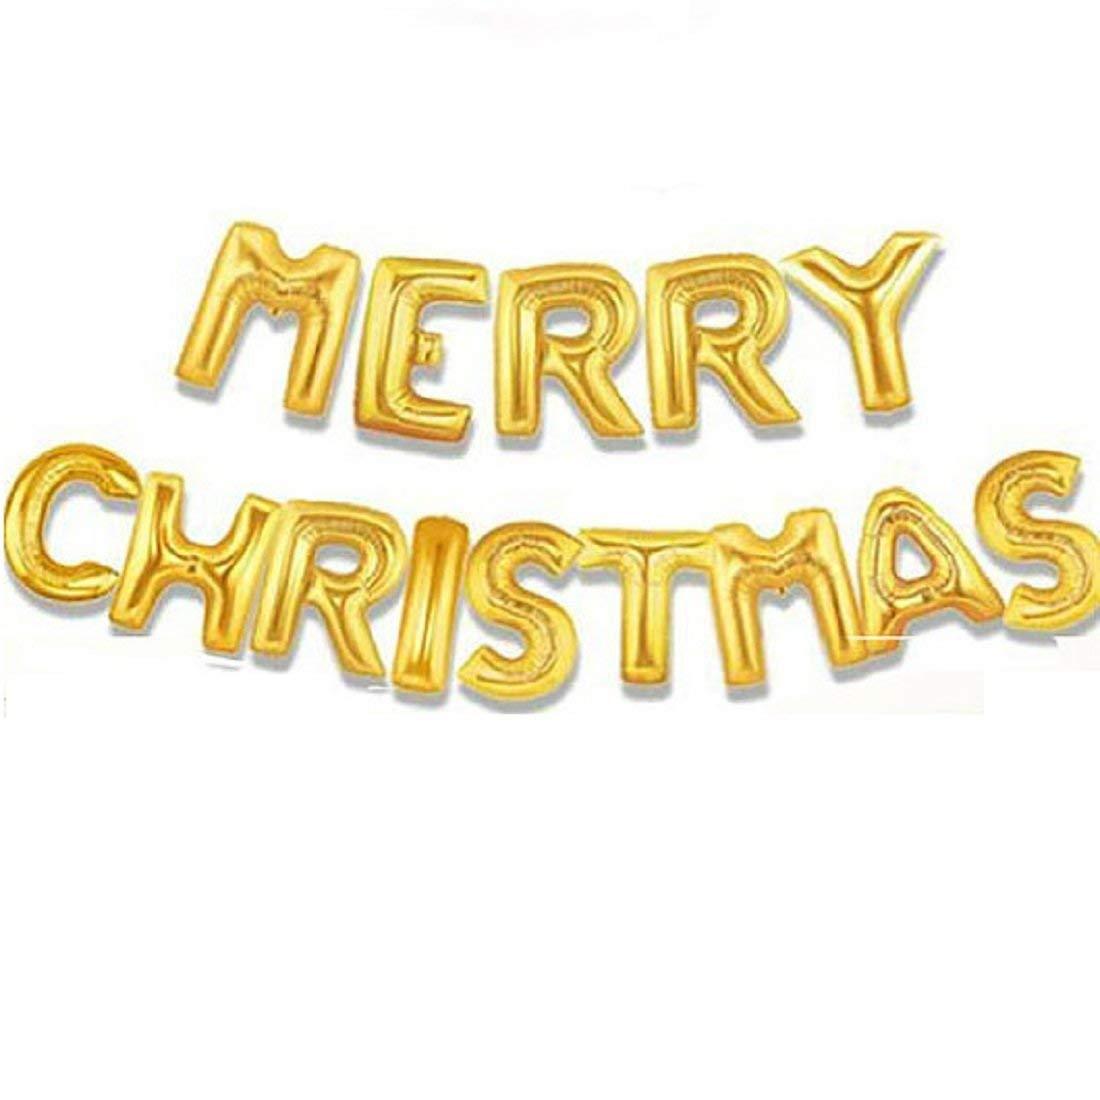 PartyCorp Gold Merry Christmas Alphabet/Letter Foil Balloon Bannner Decoration Set